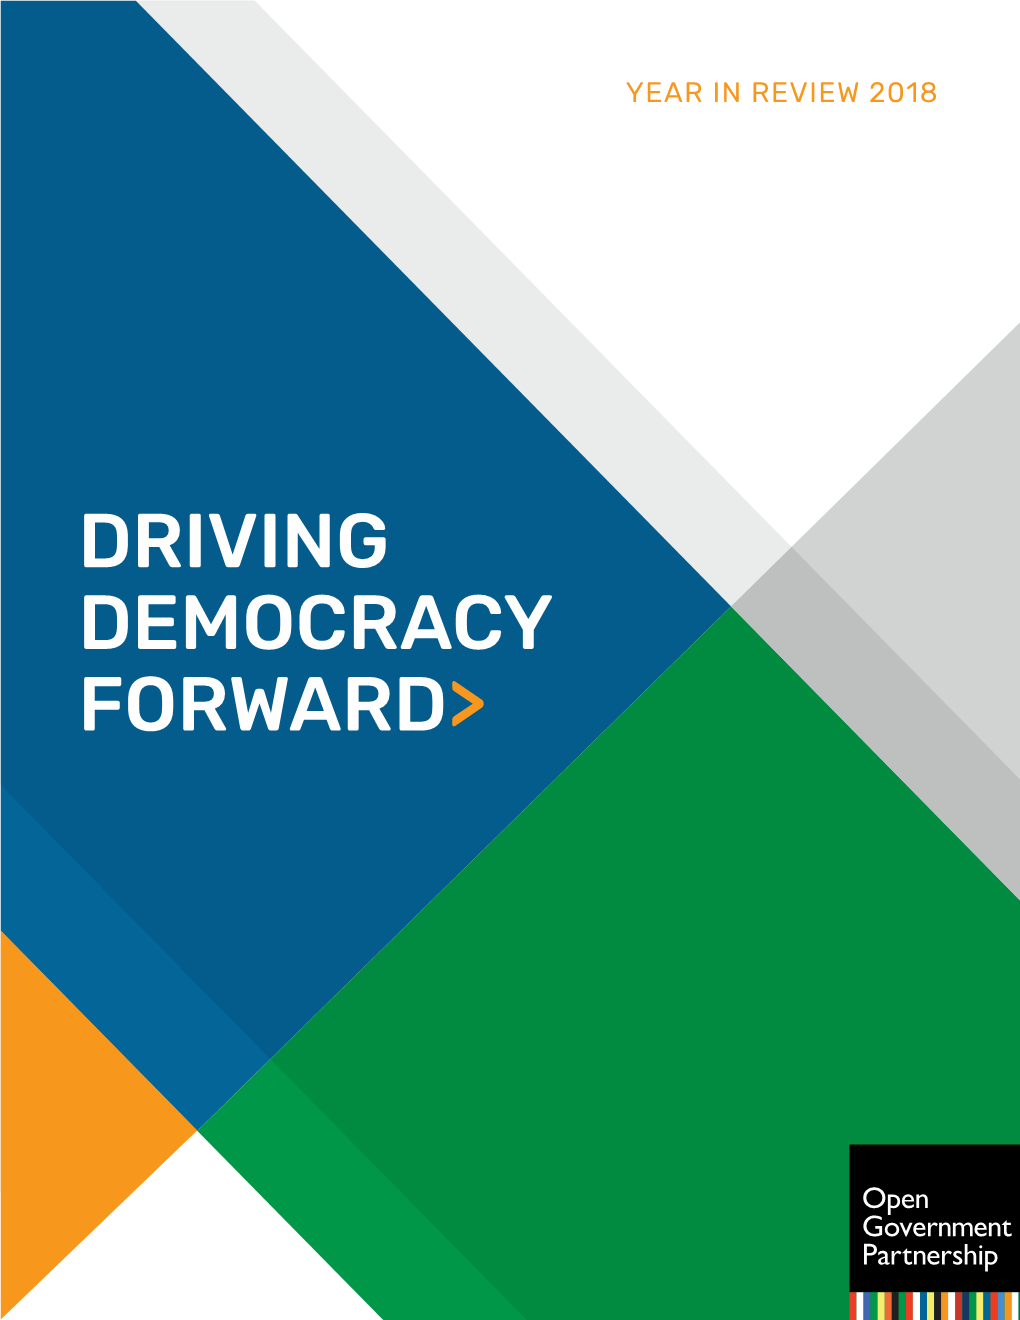 DRIVING DEMOCRACY FORWARD&gt;